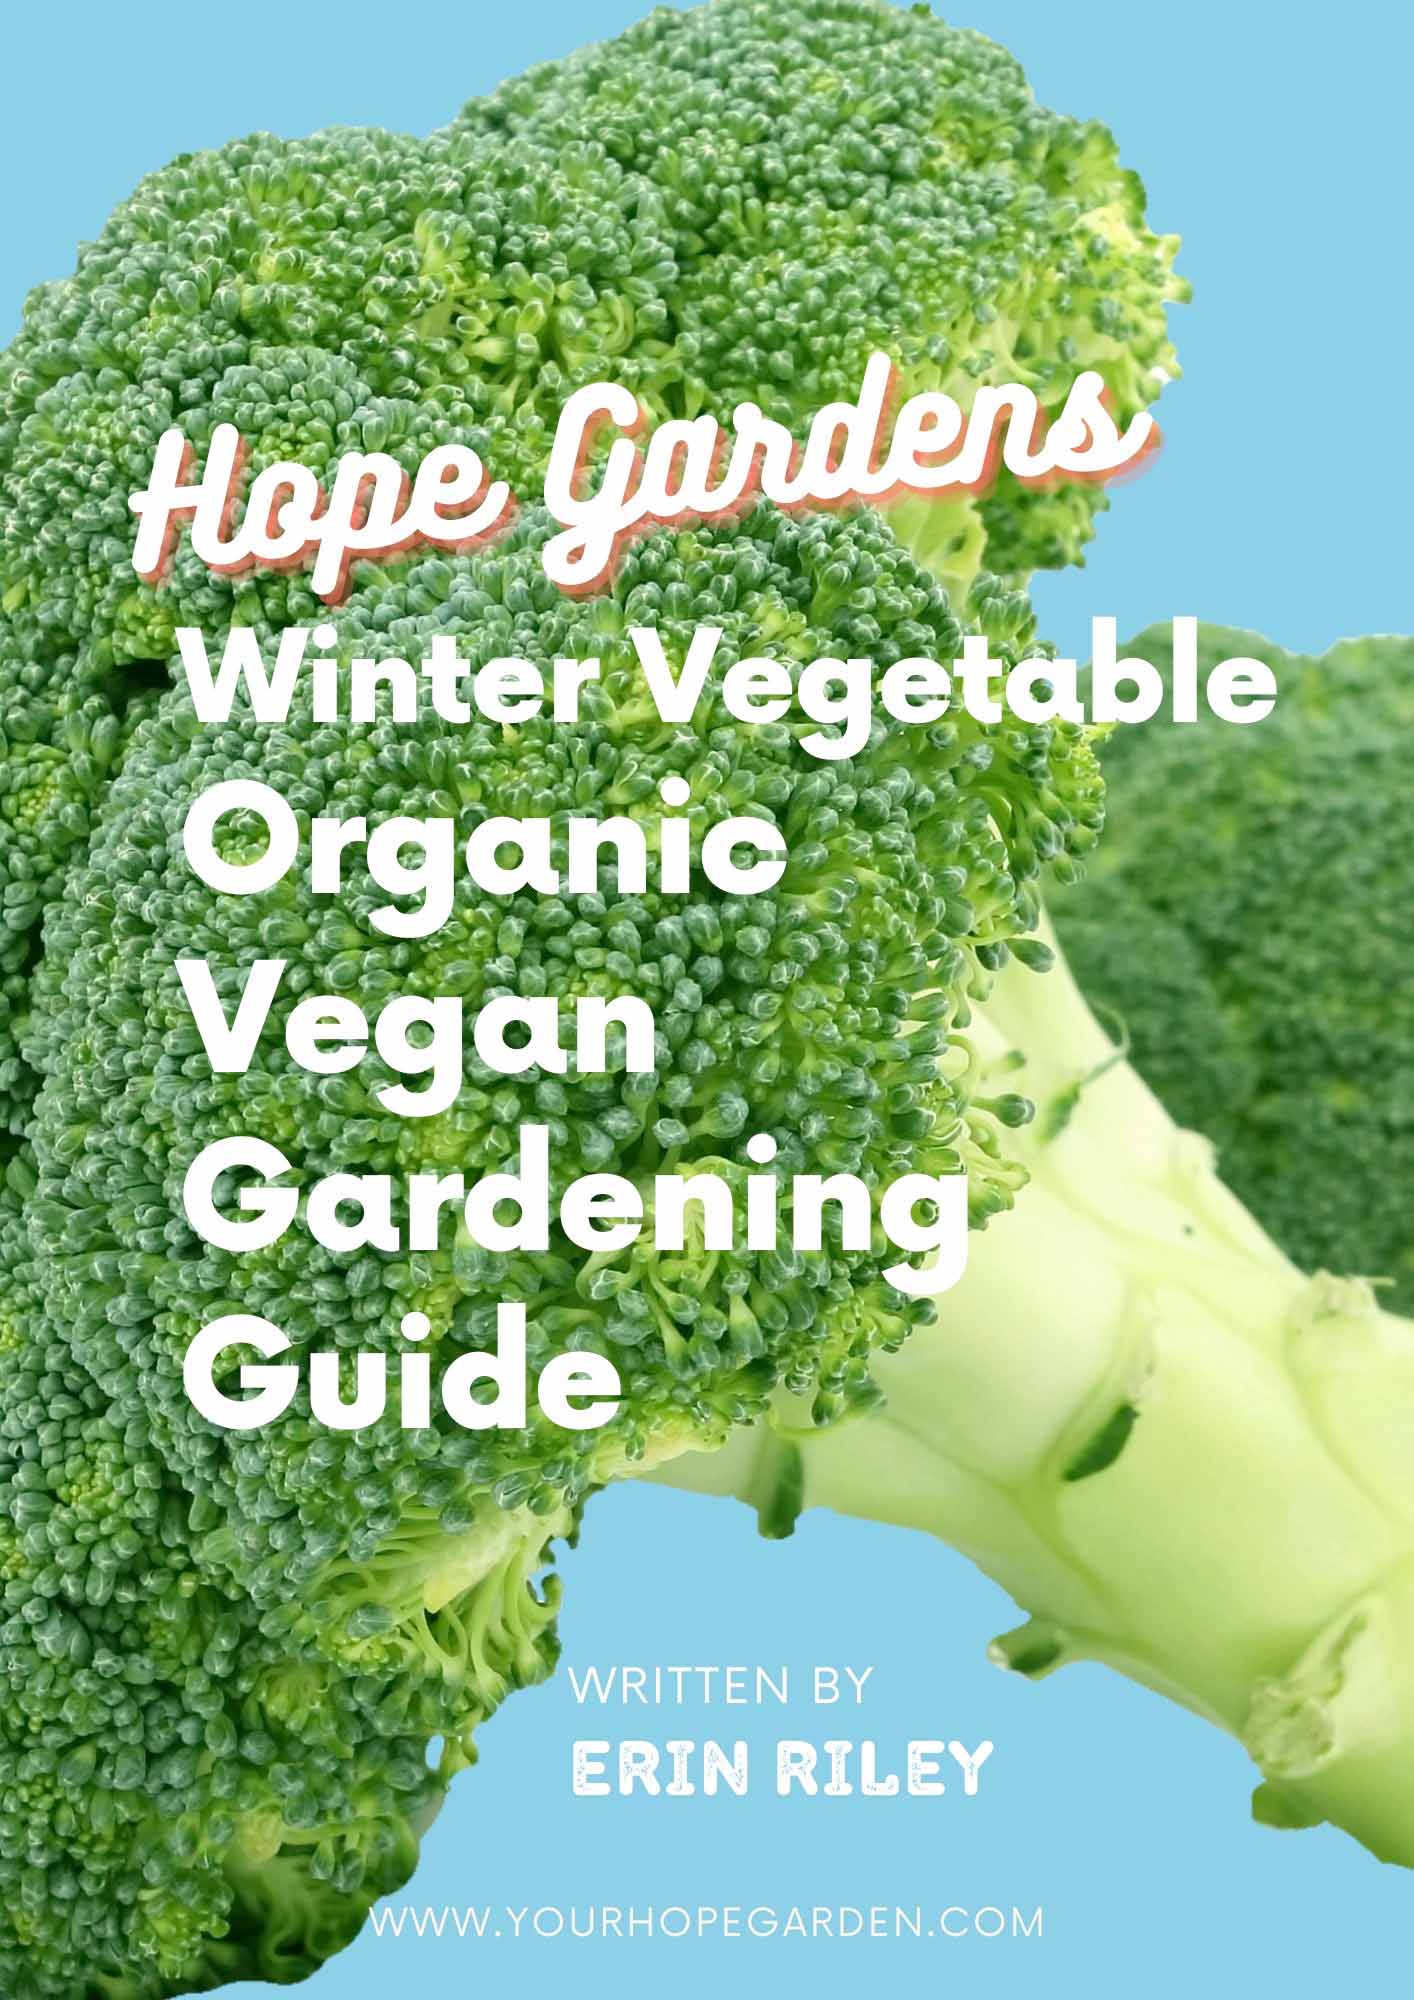 Hope Gardens Winter Vegetable Organic Vegan Gardening Guide